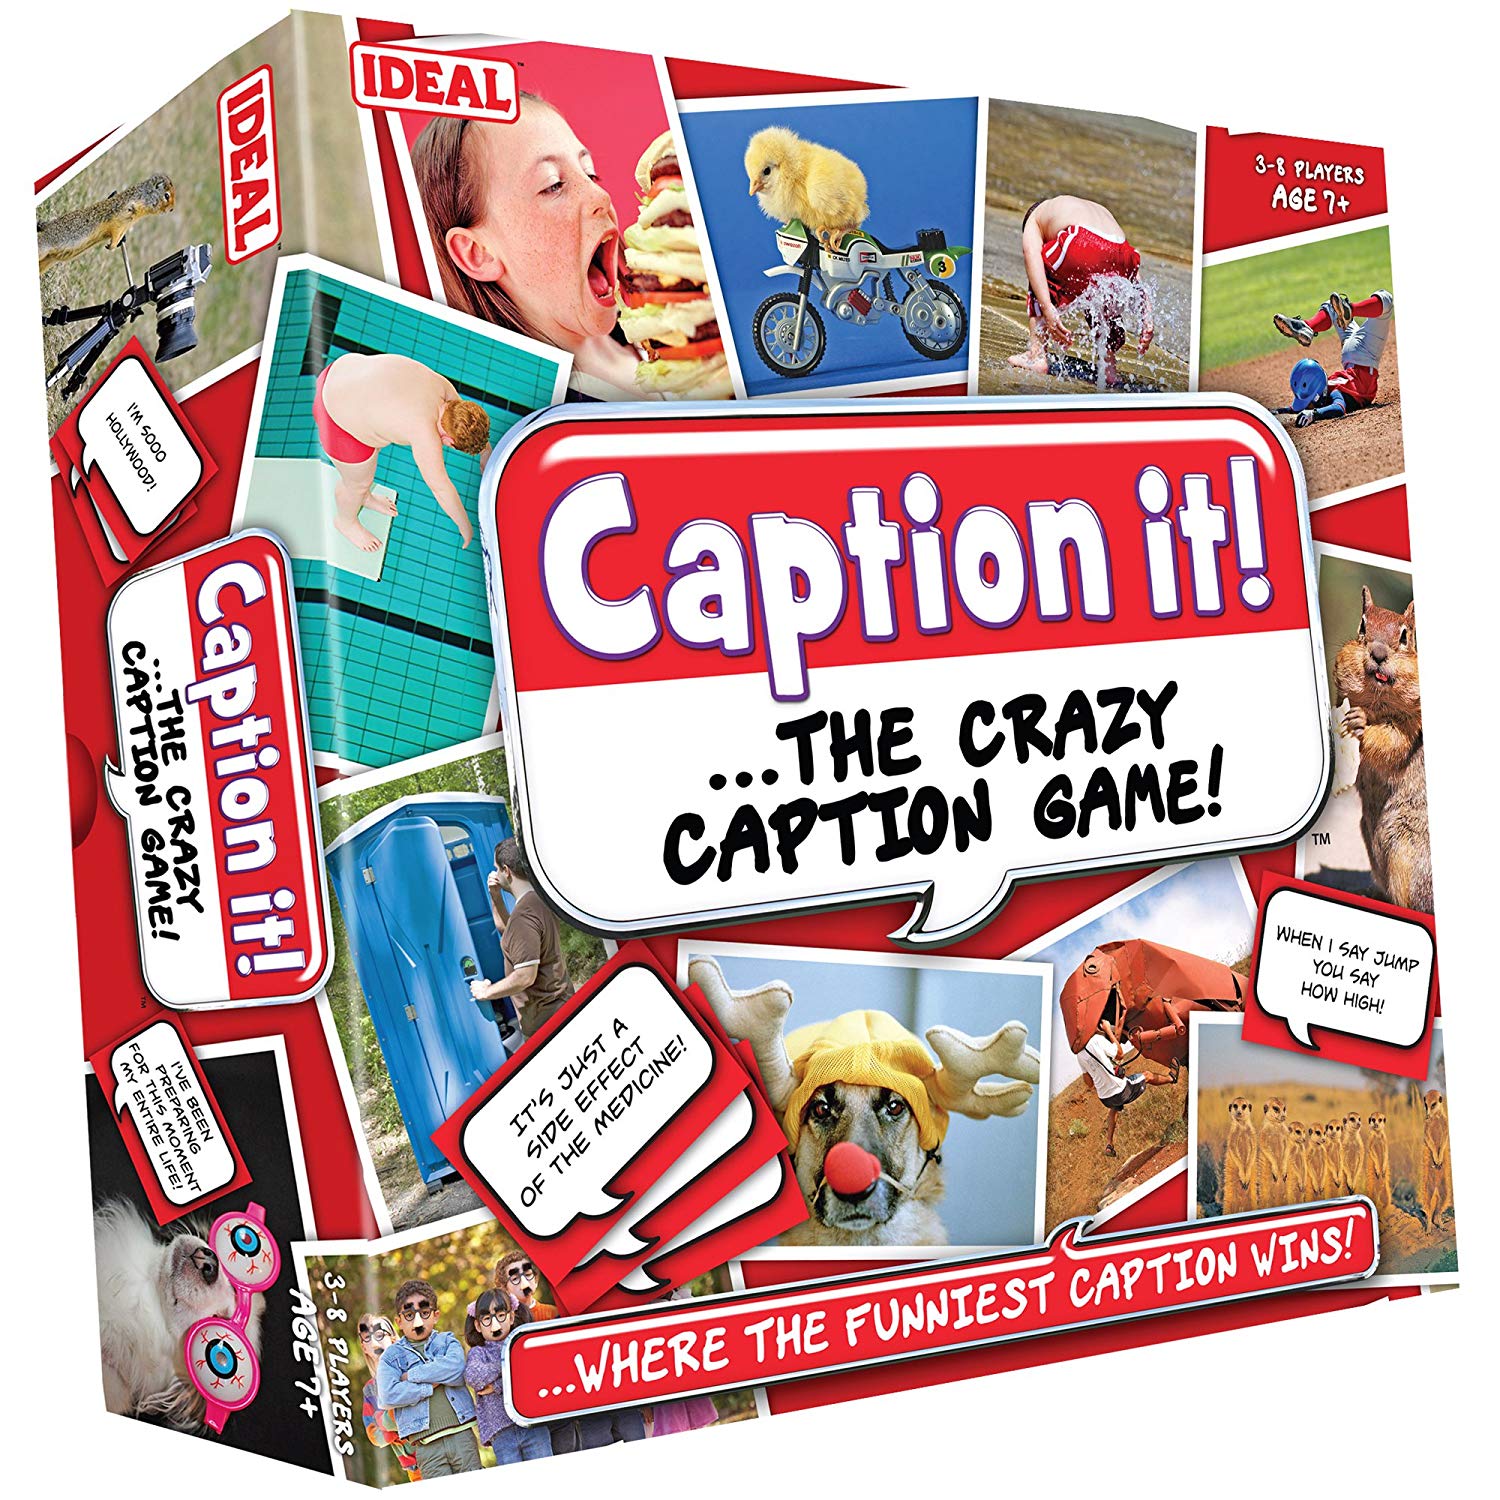 Caption It Card Game: Amazon.co.uk: Toys & Games